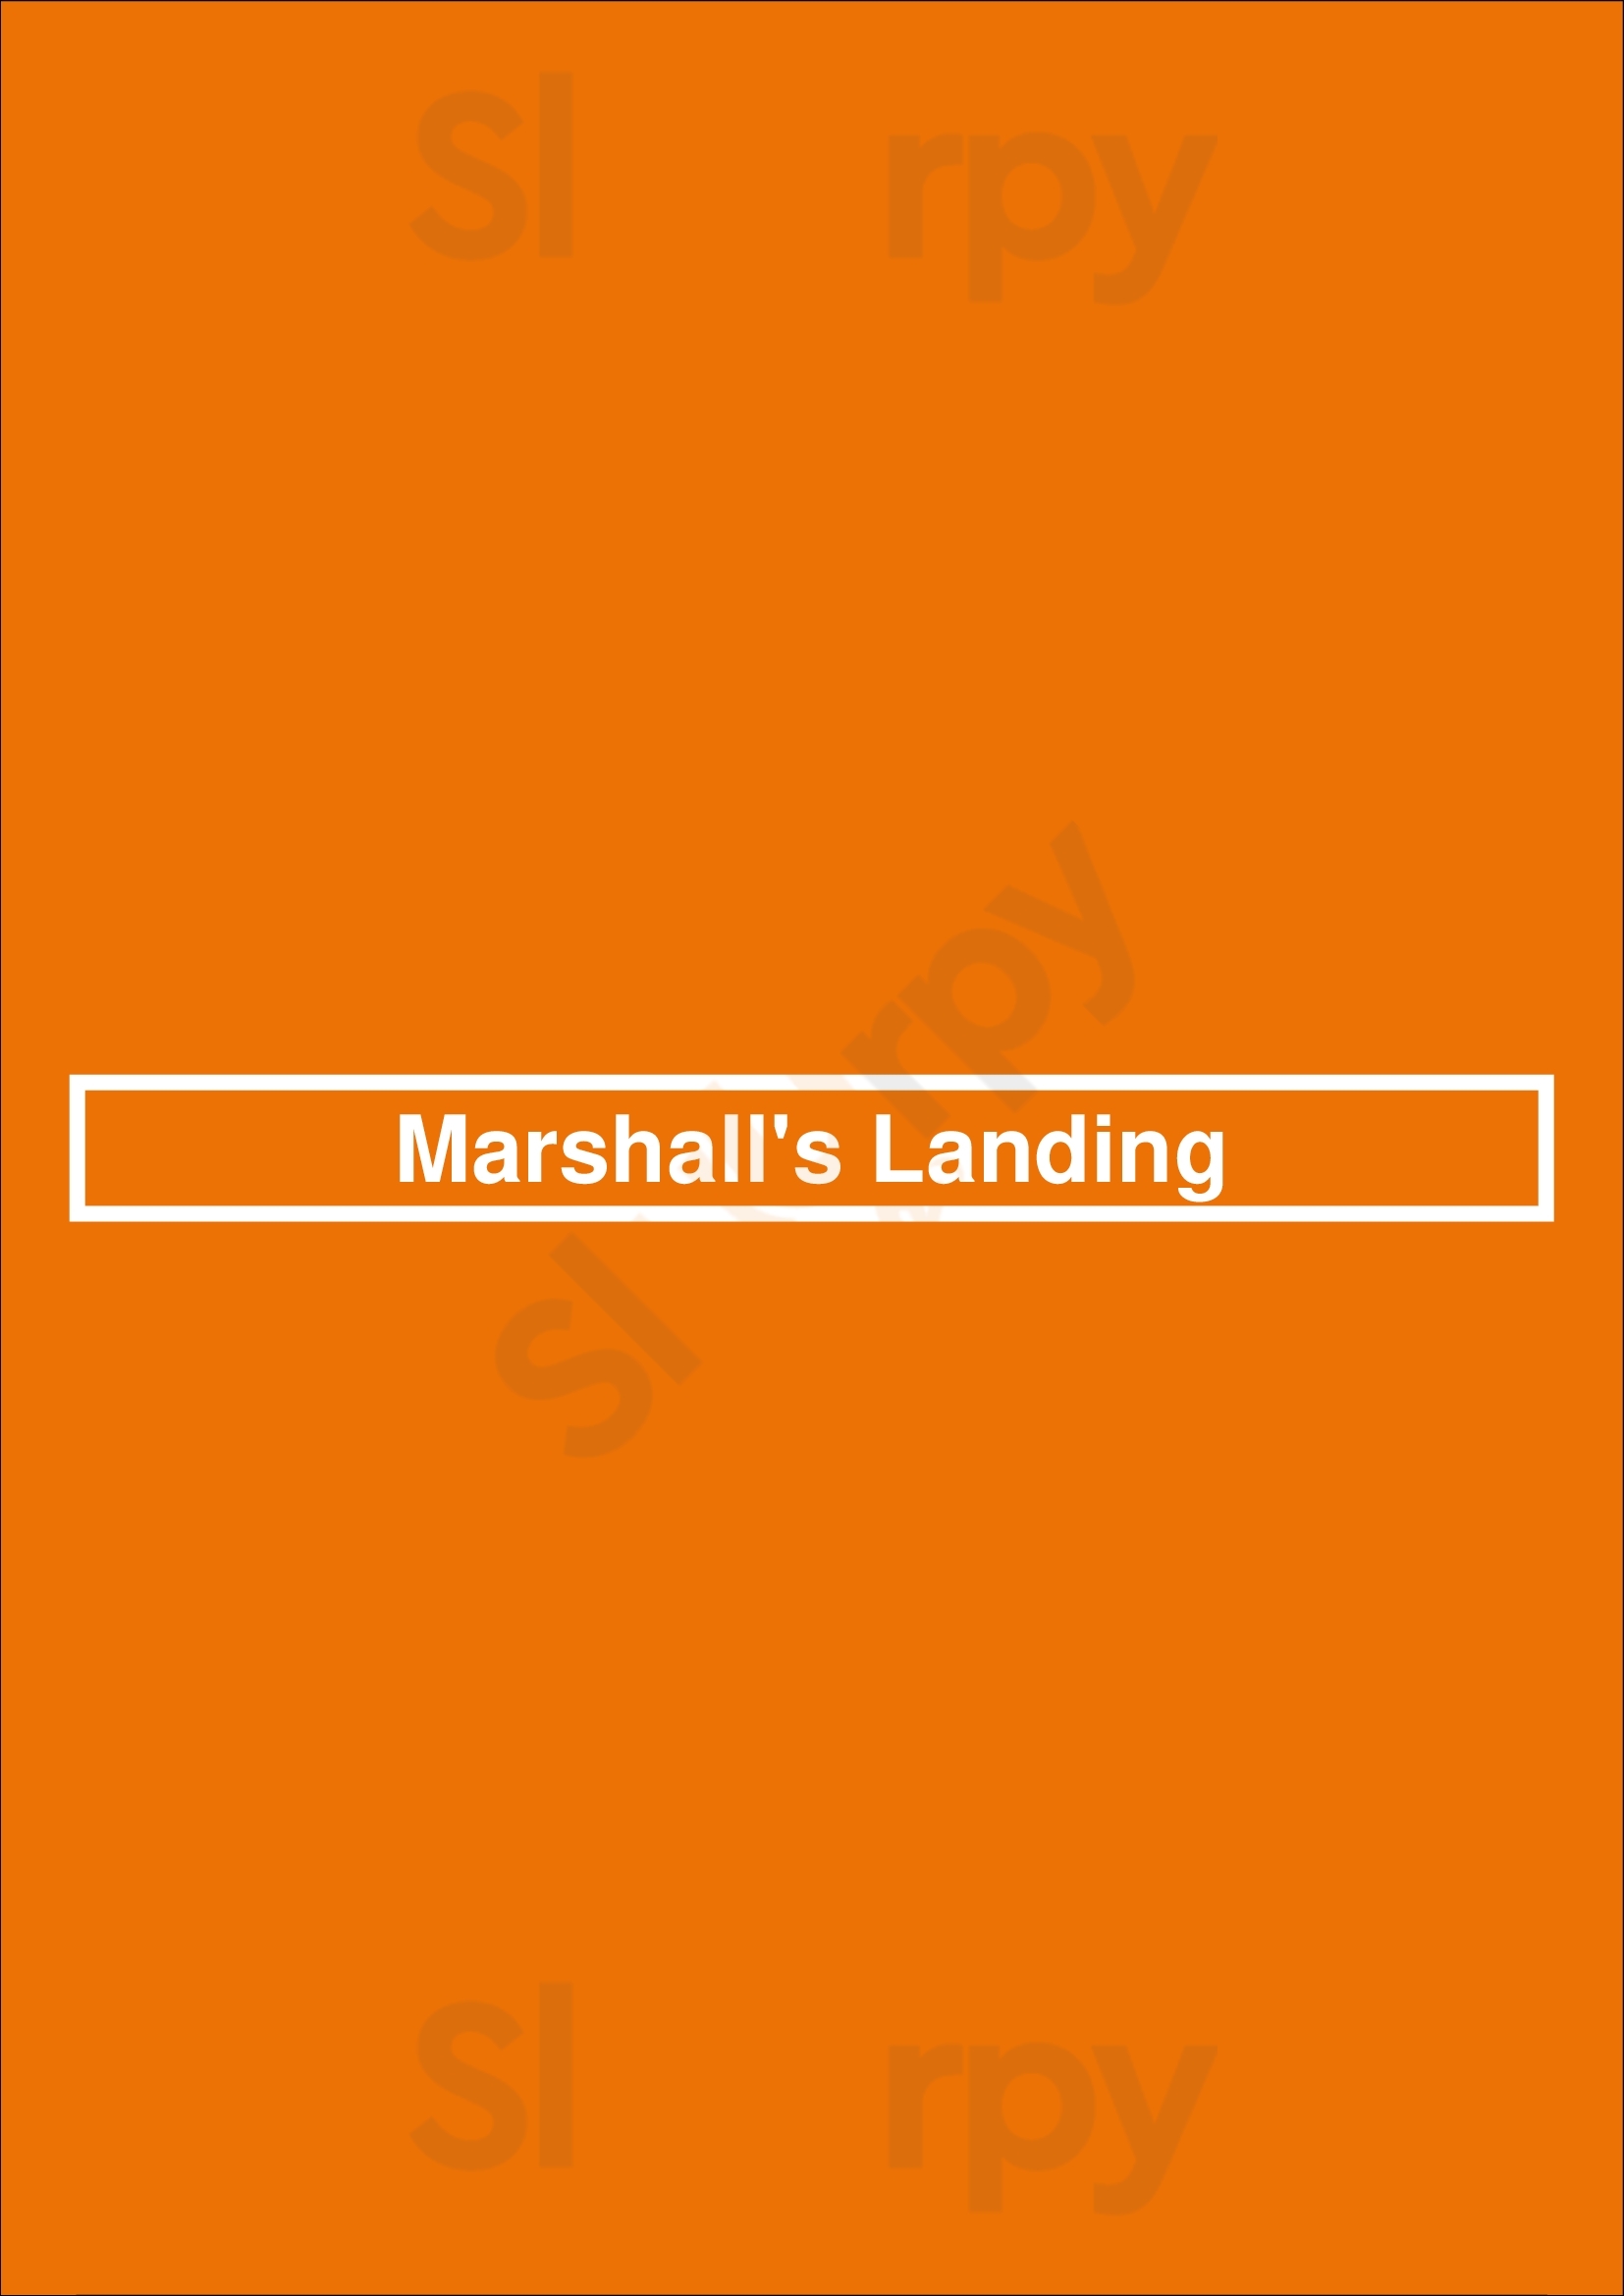 Marshall's Landing Chicago Menu - 1